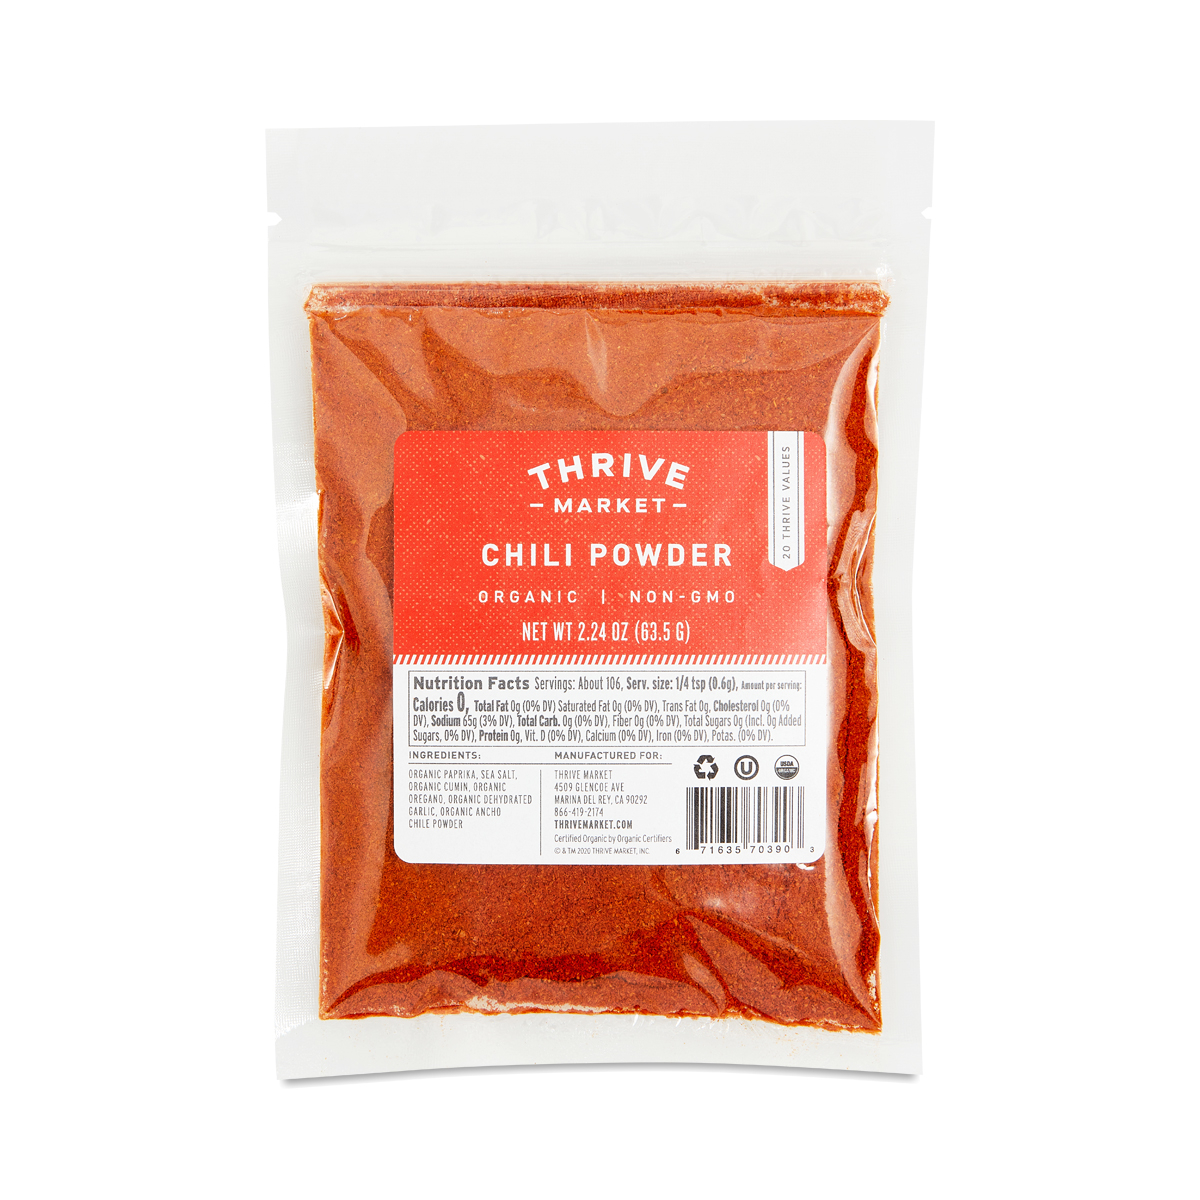 Thrive Market Organic Chili Powder 2.24 oz pouch